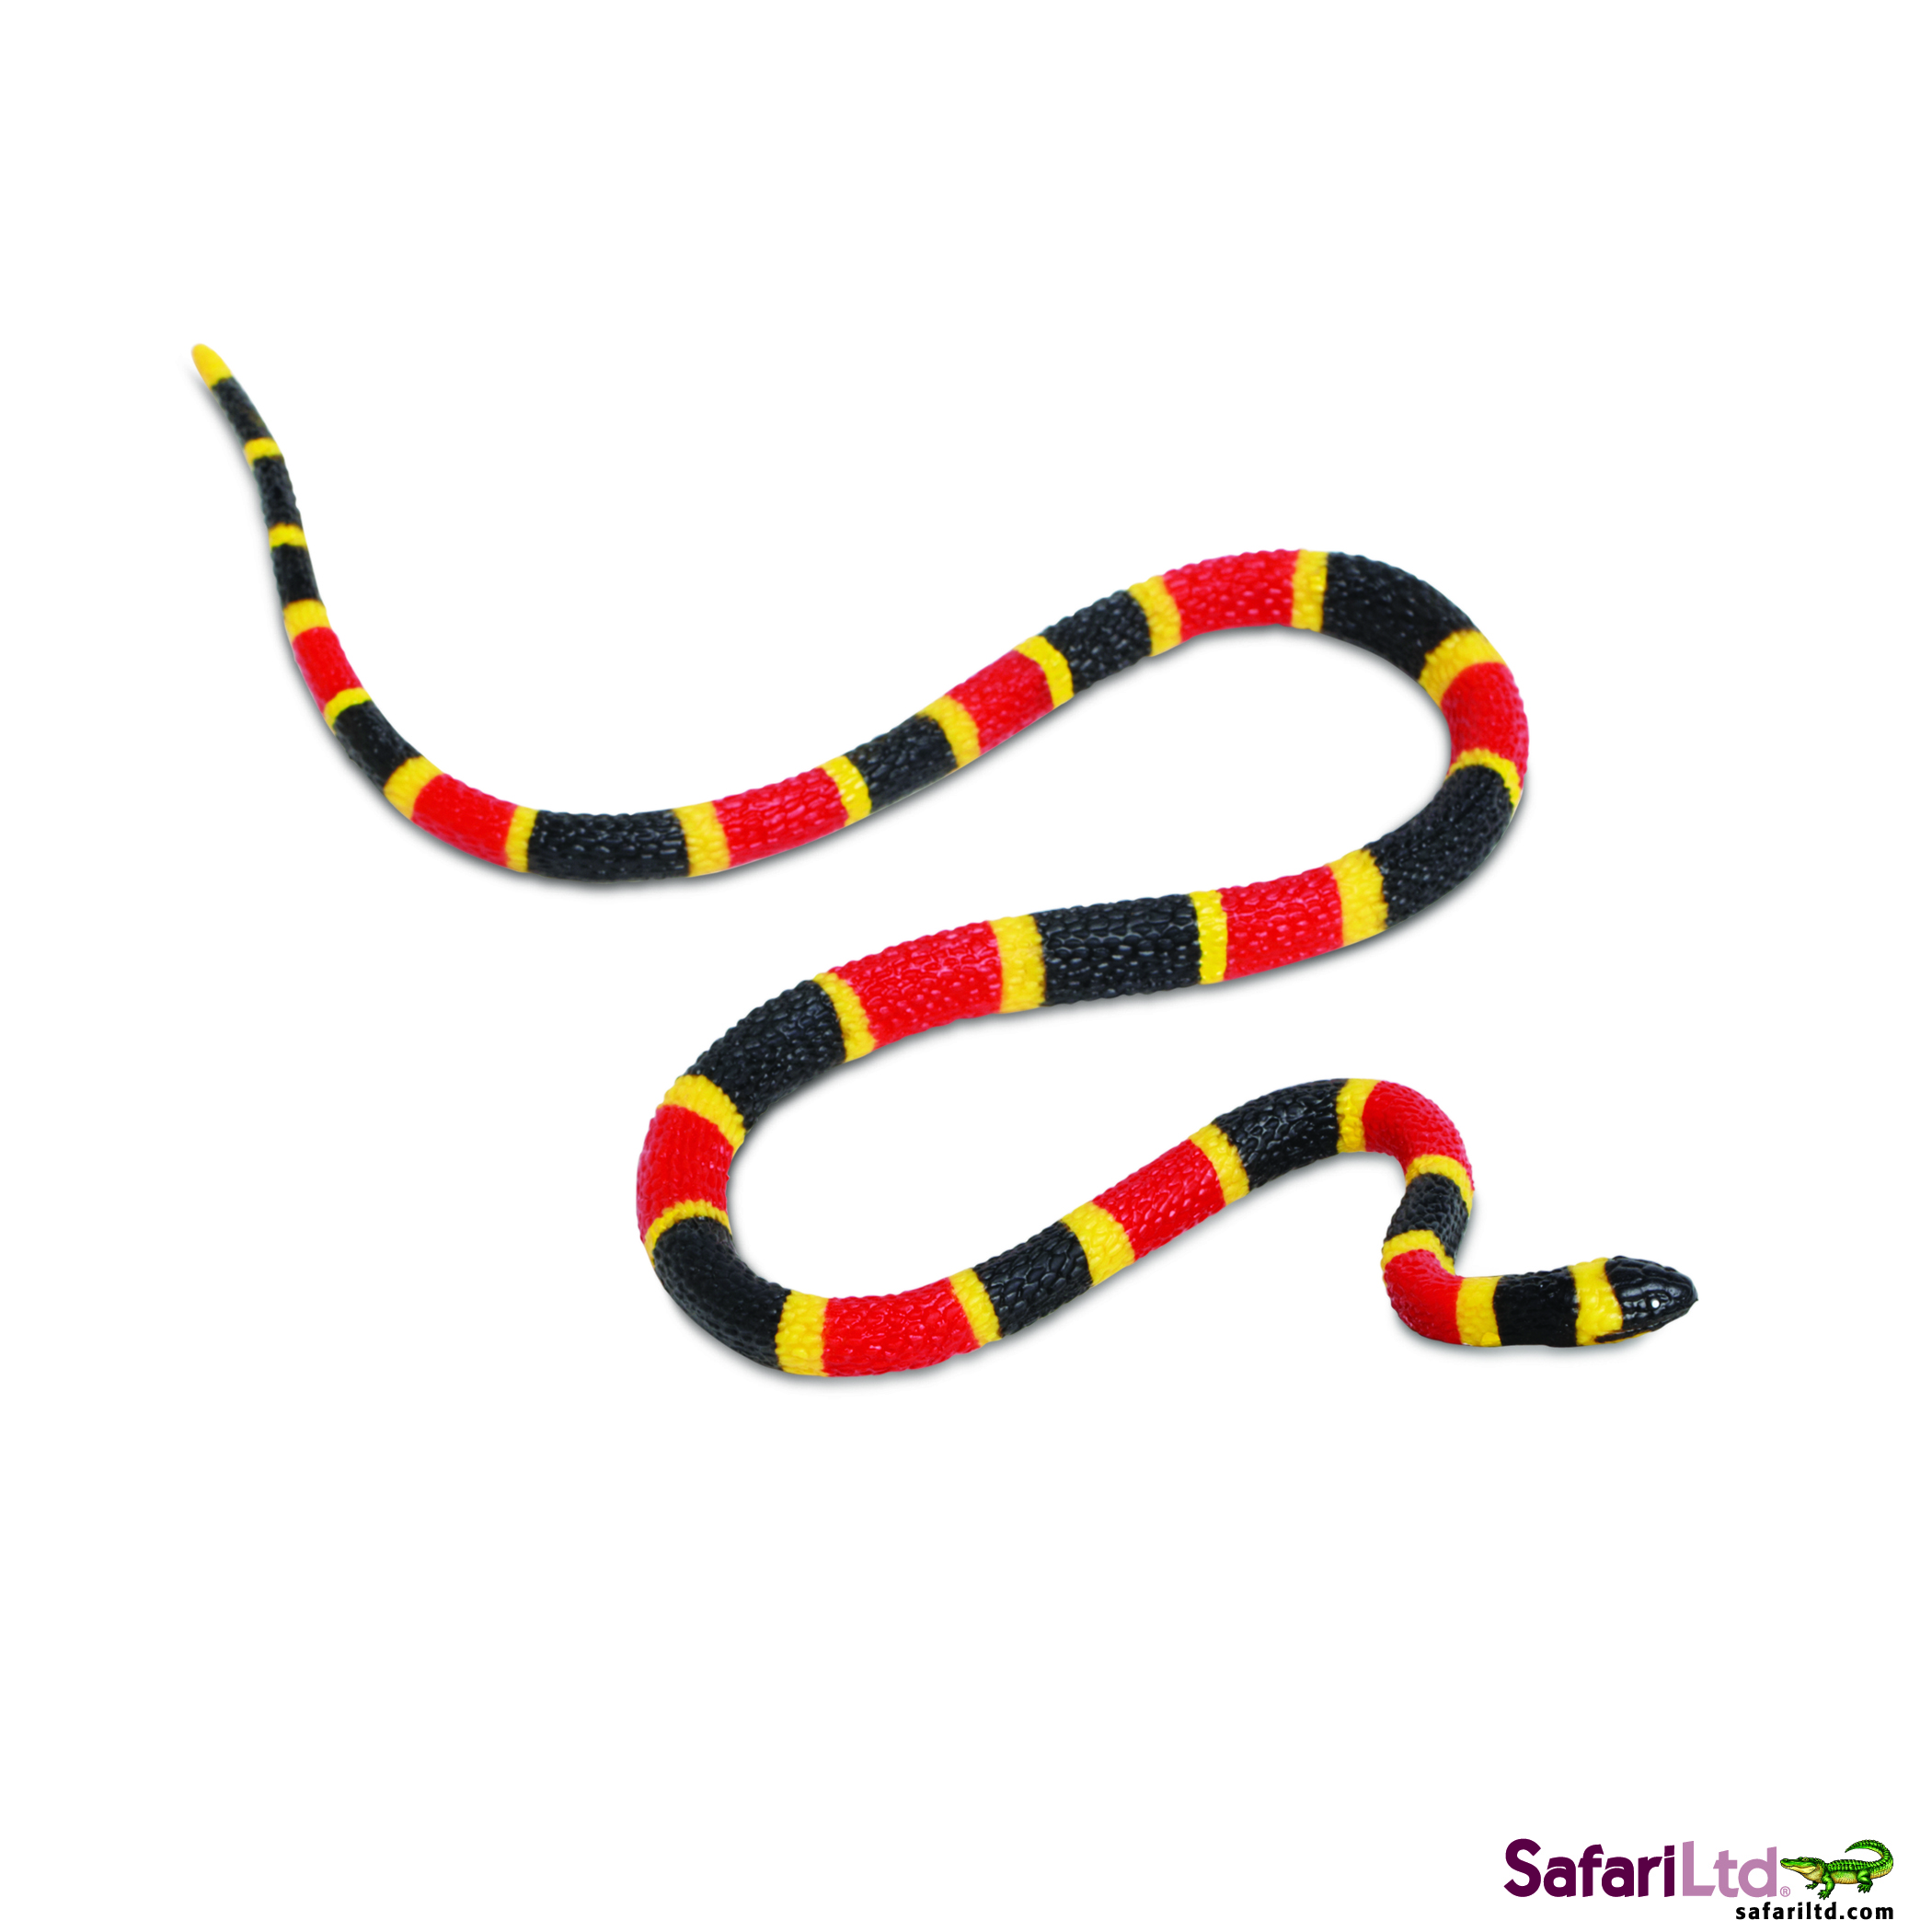 Snake clip art for kids free clipart images 2